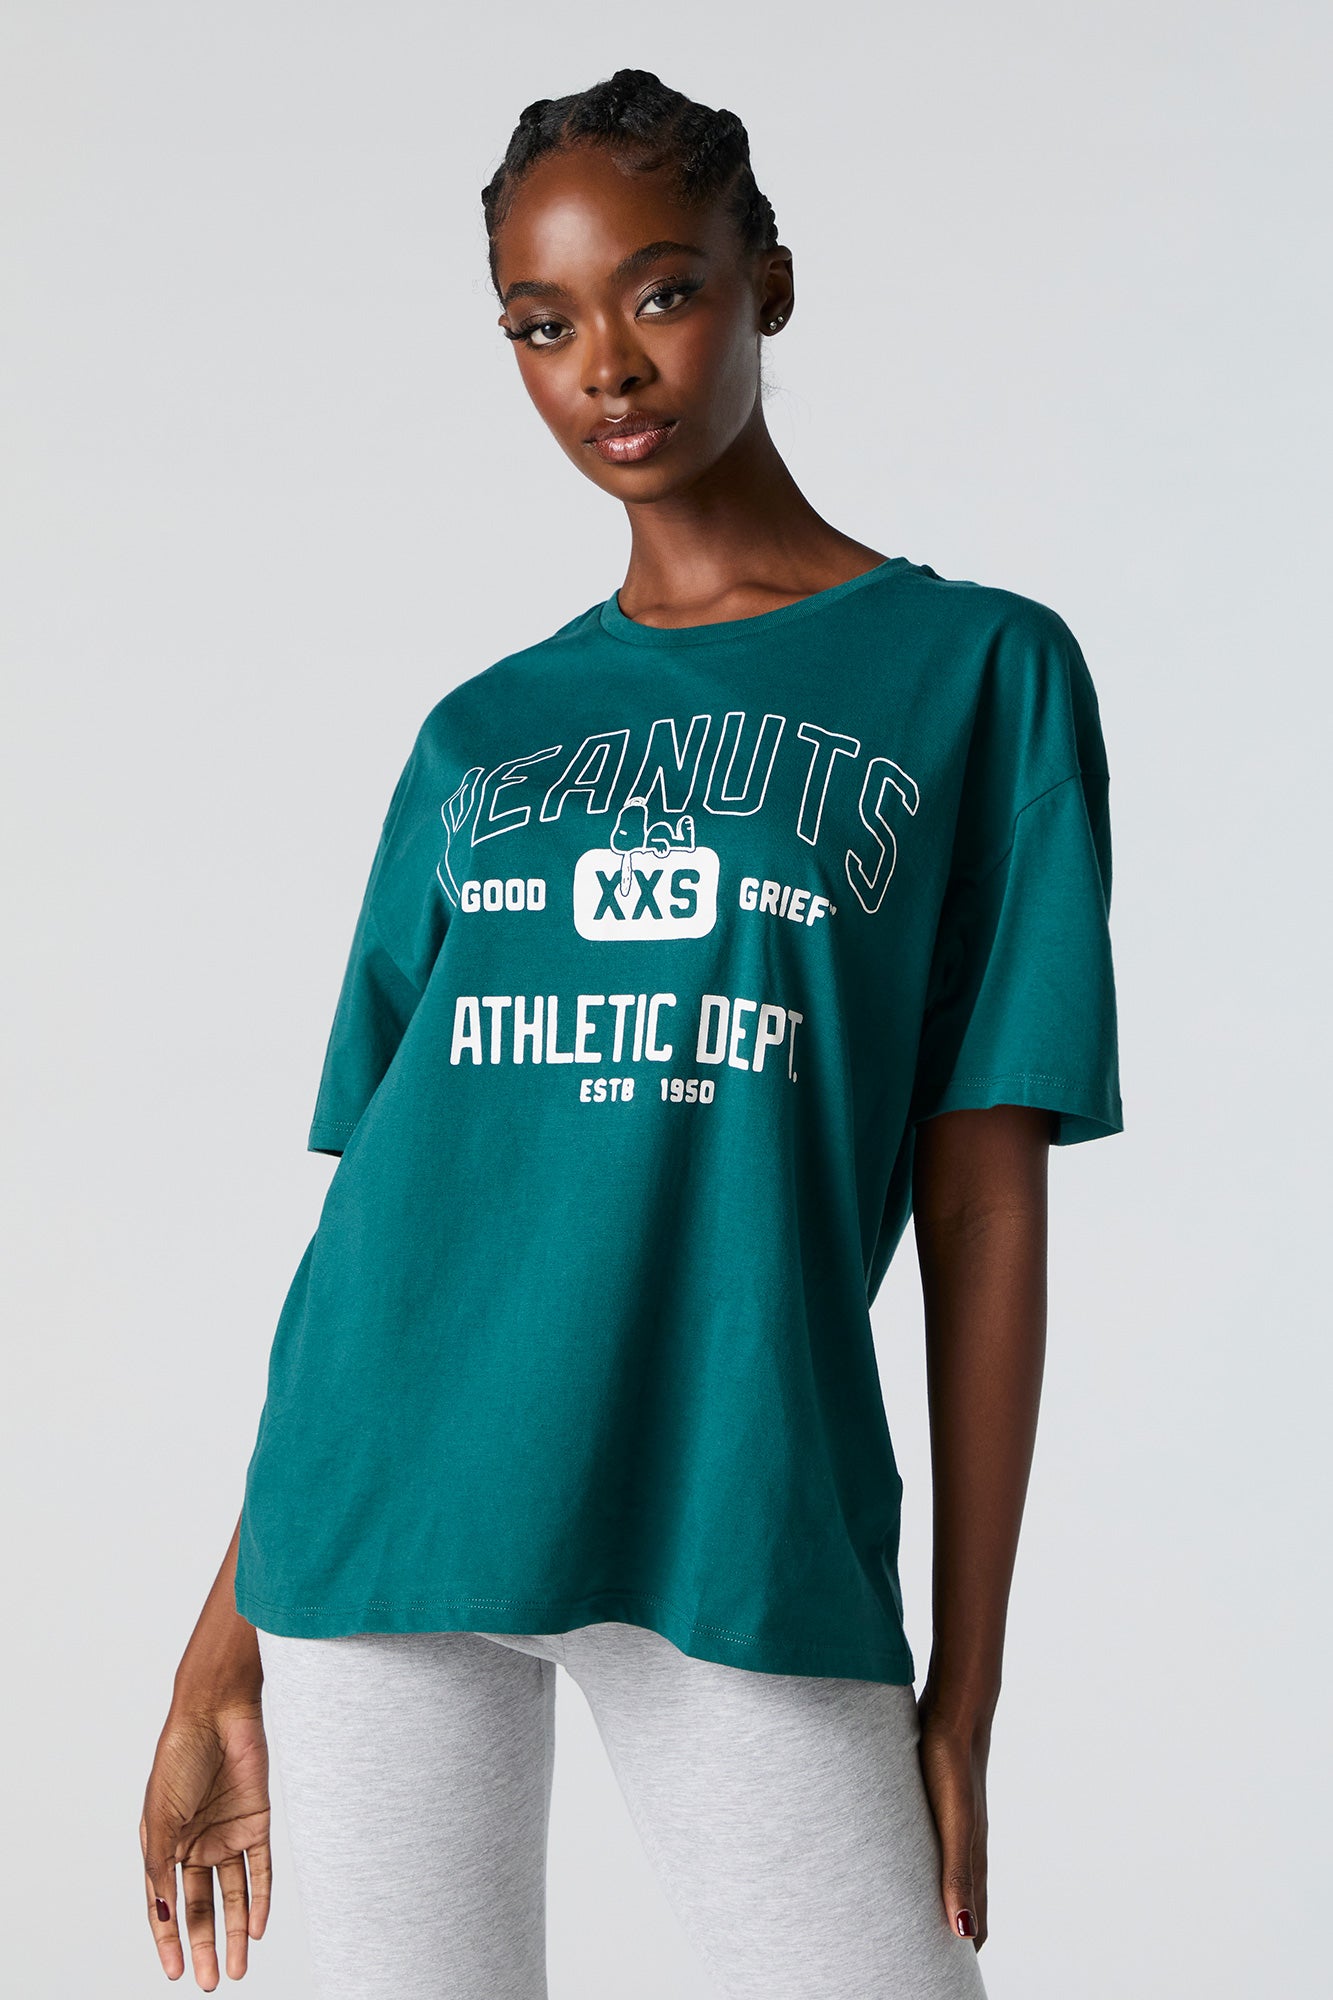 Peanuts Athletic Dept Graphic Boyfriend T-Shirt